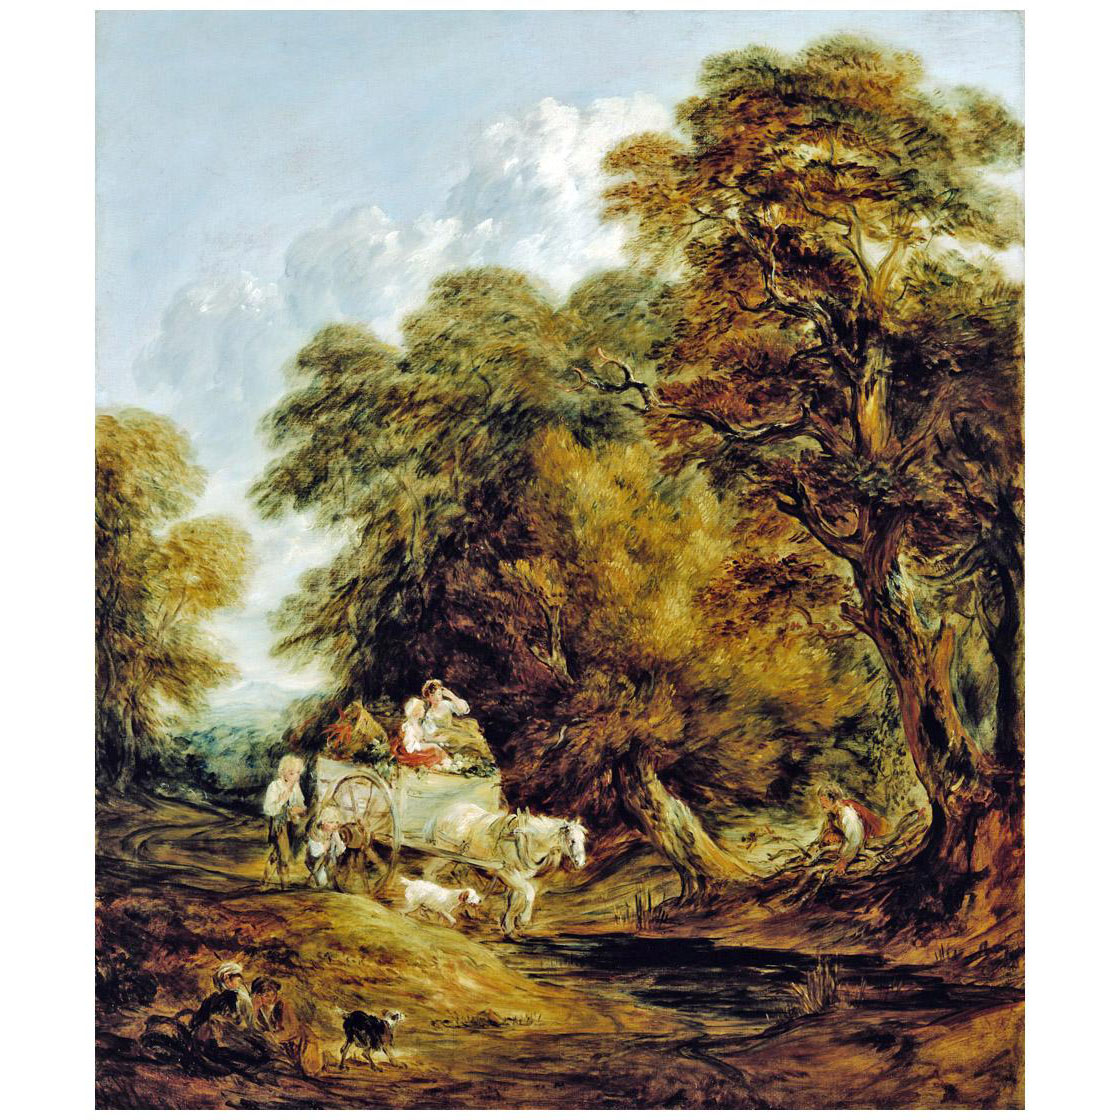 Thomas Gainsborough. The Market Cart. 1786. National Gallery London